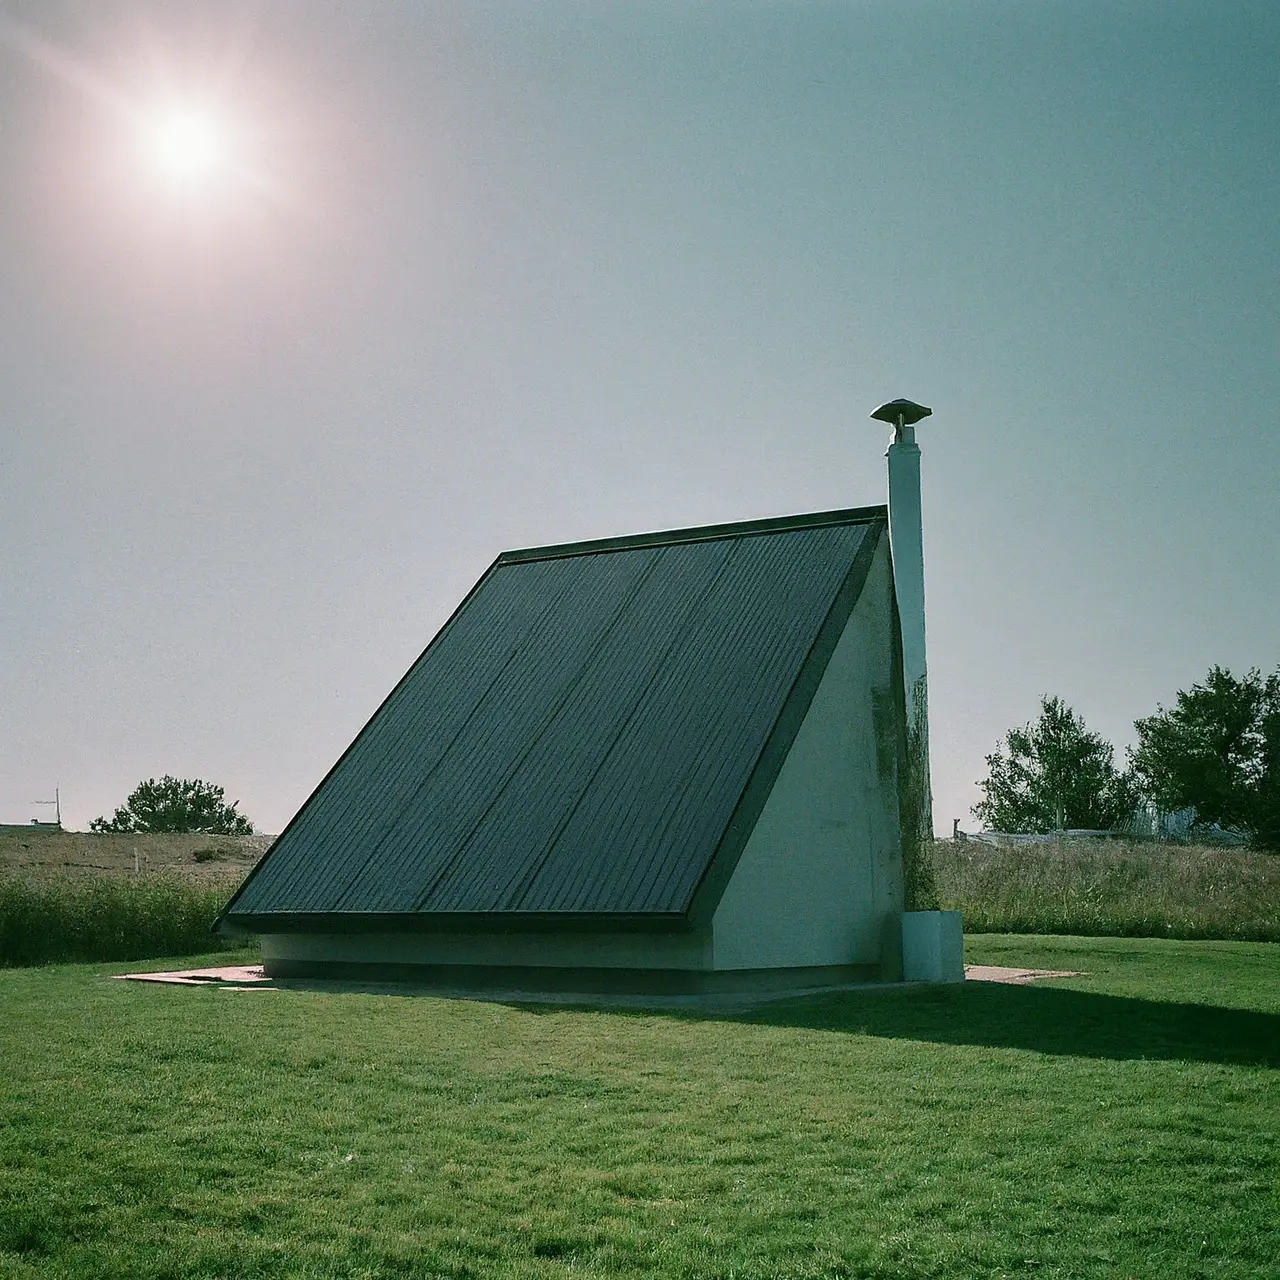 A solar-powered crematorium under a bright sun. 35mm stock photo